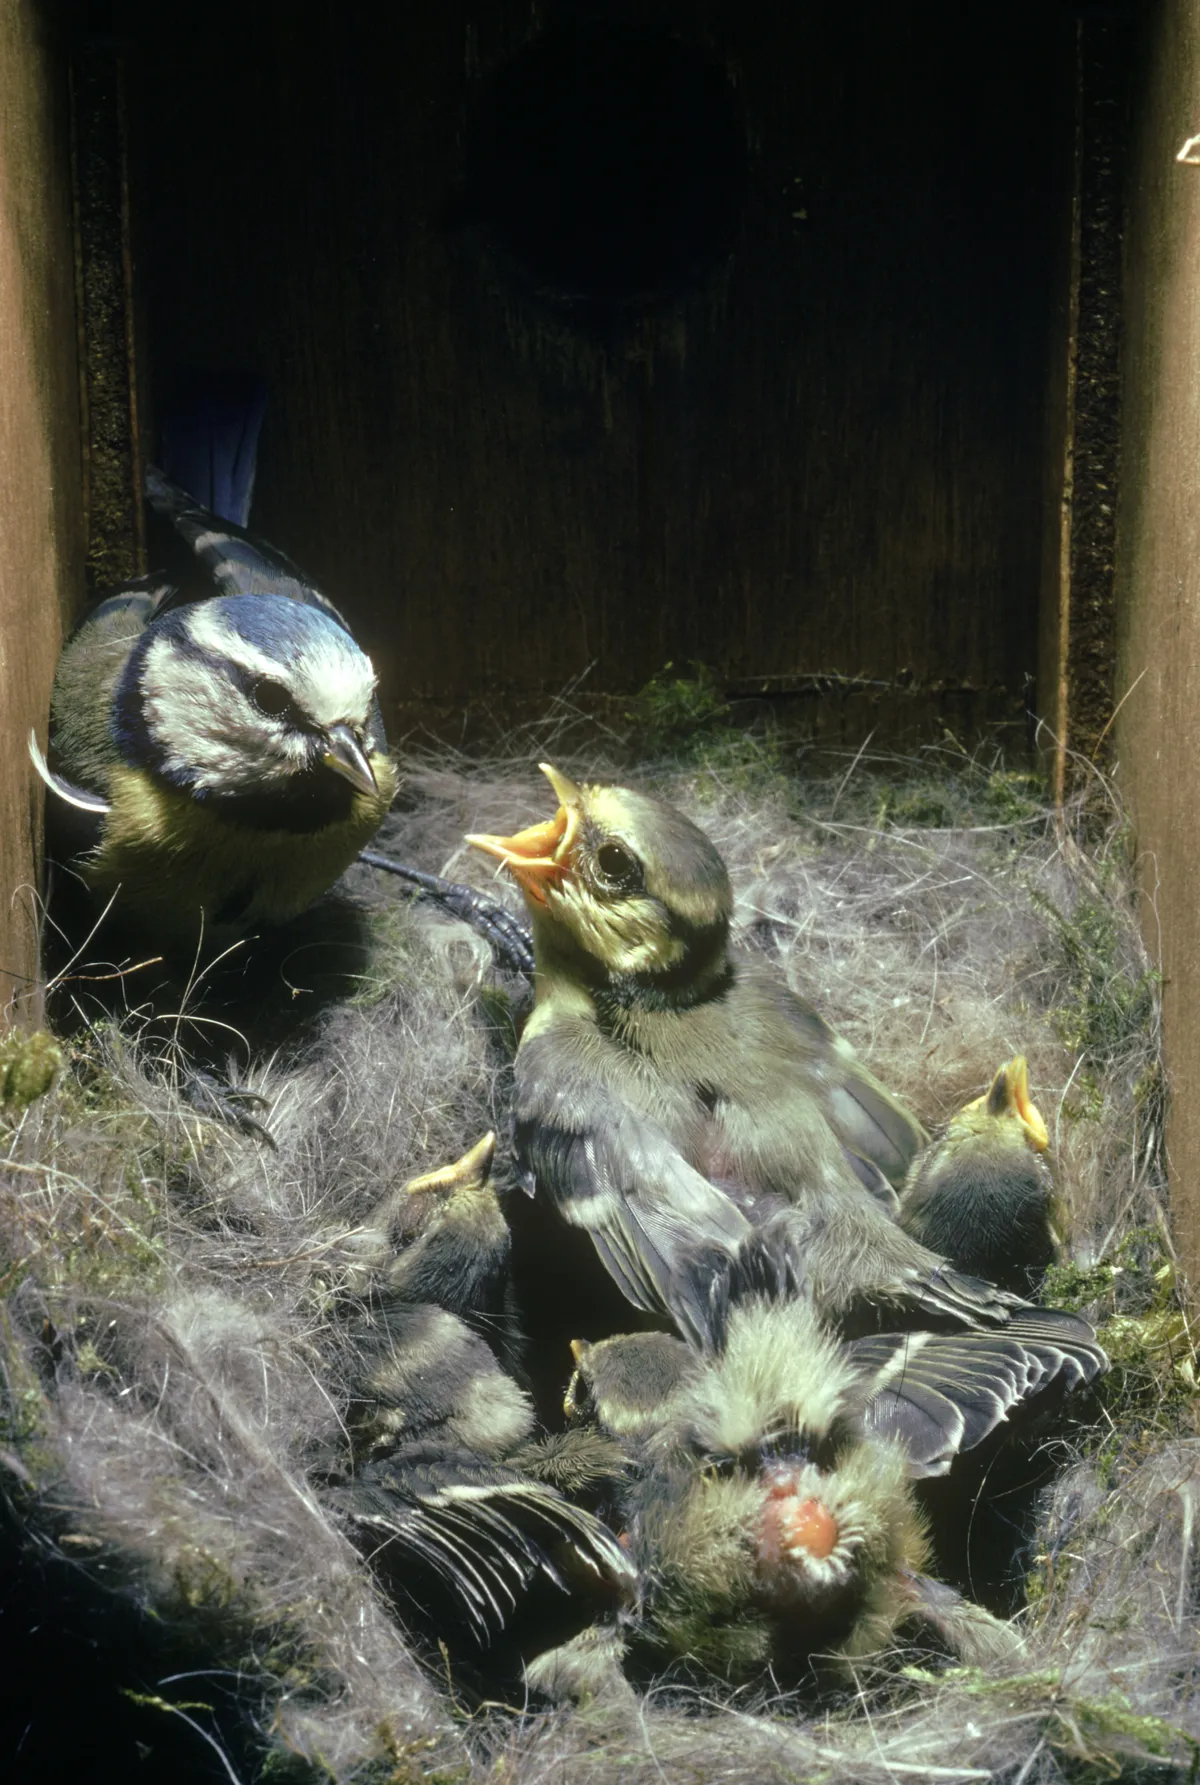 Adult blue tit (Parus caeruleus) feeding 14-15 day old chicks in nest box